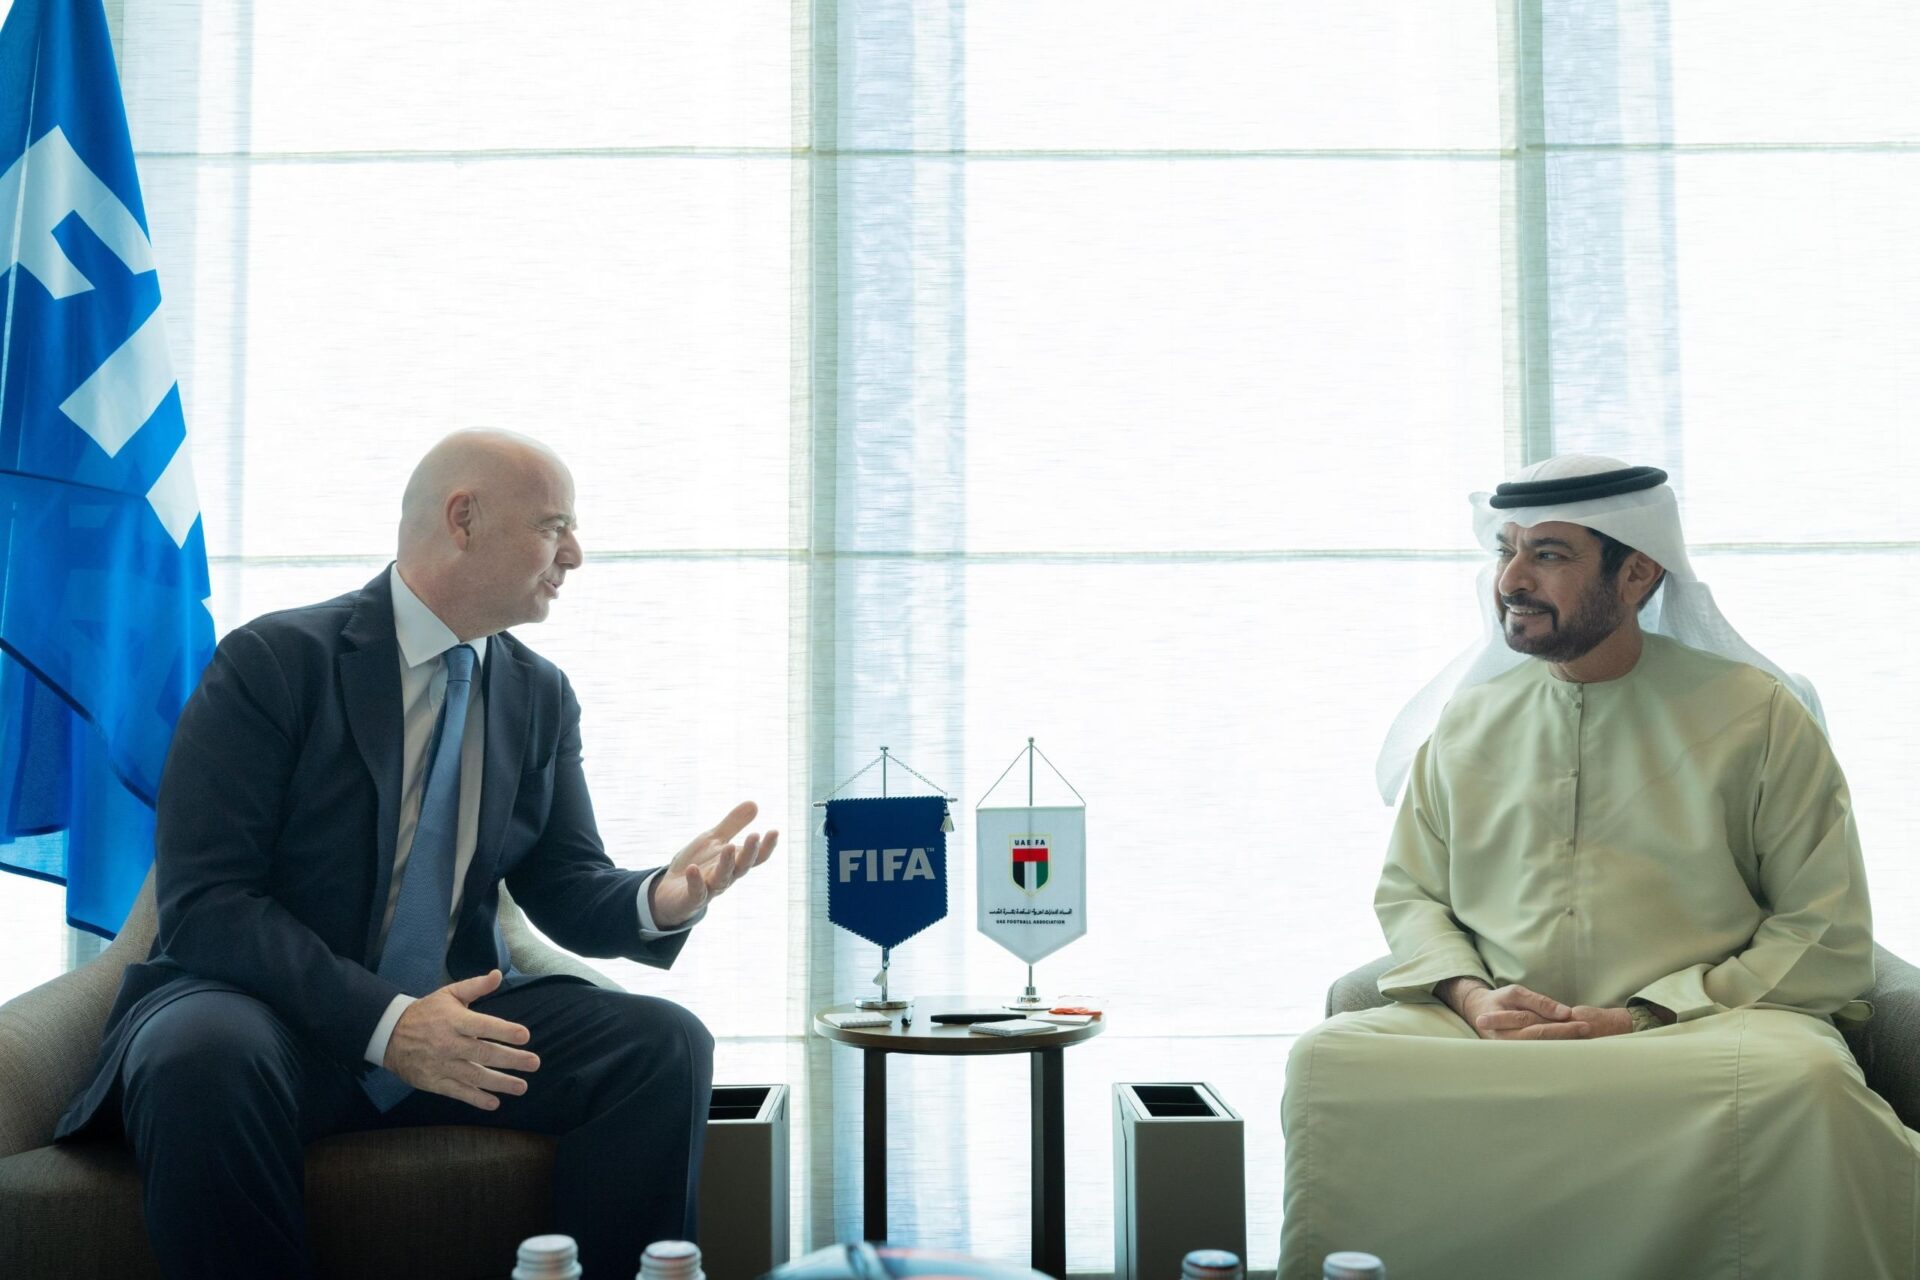 FIFA President Gianni Infantino, who is visiting the UAE for the FIFA Beach Soccer World Cup in Dubai, met with Sheikh Hamdan bin Mubarak, President of the UAE Football Association, on Thursday.